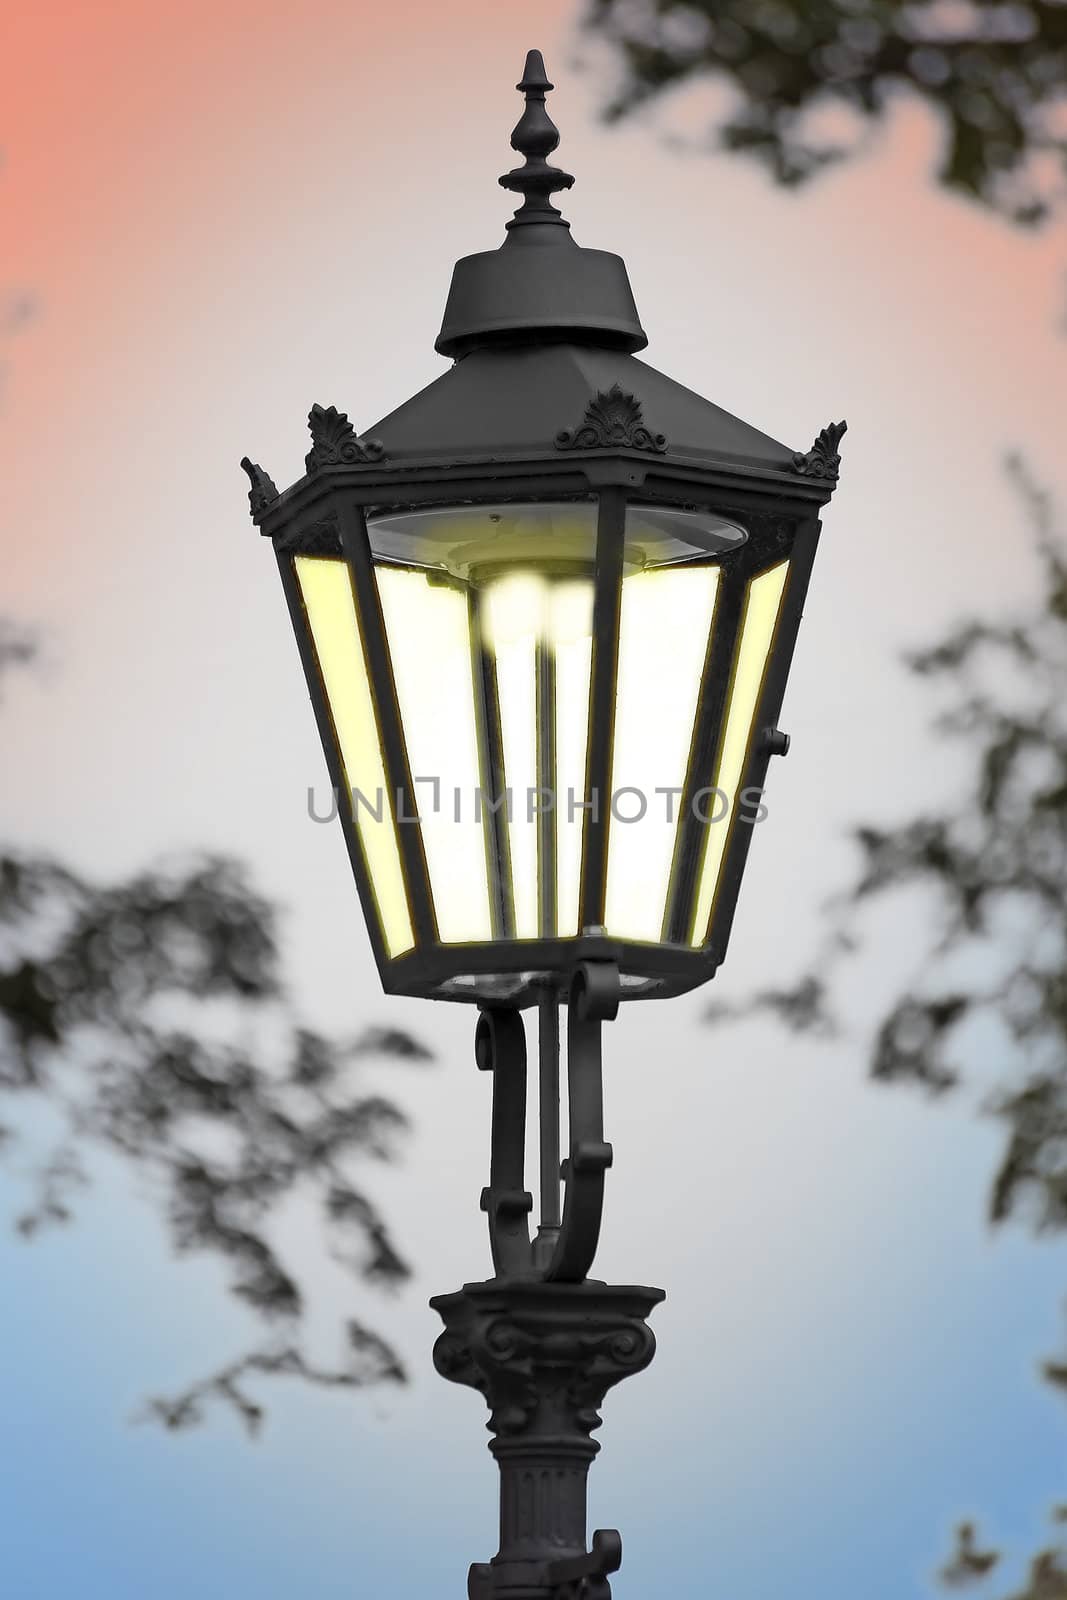 cast iron illuminated street lamp in the evening